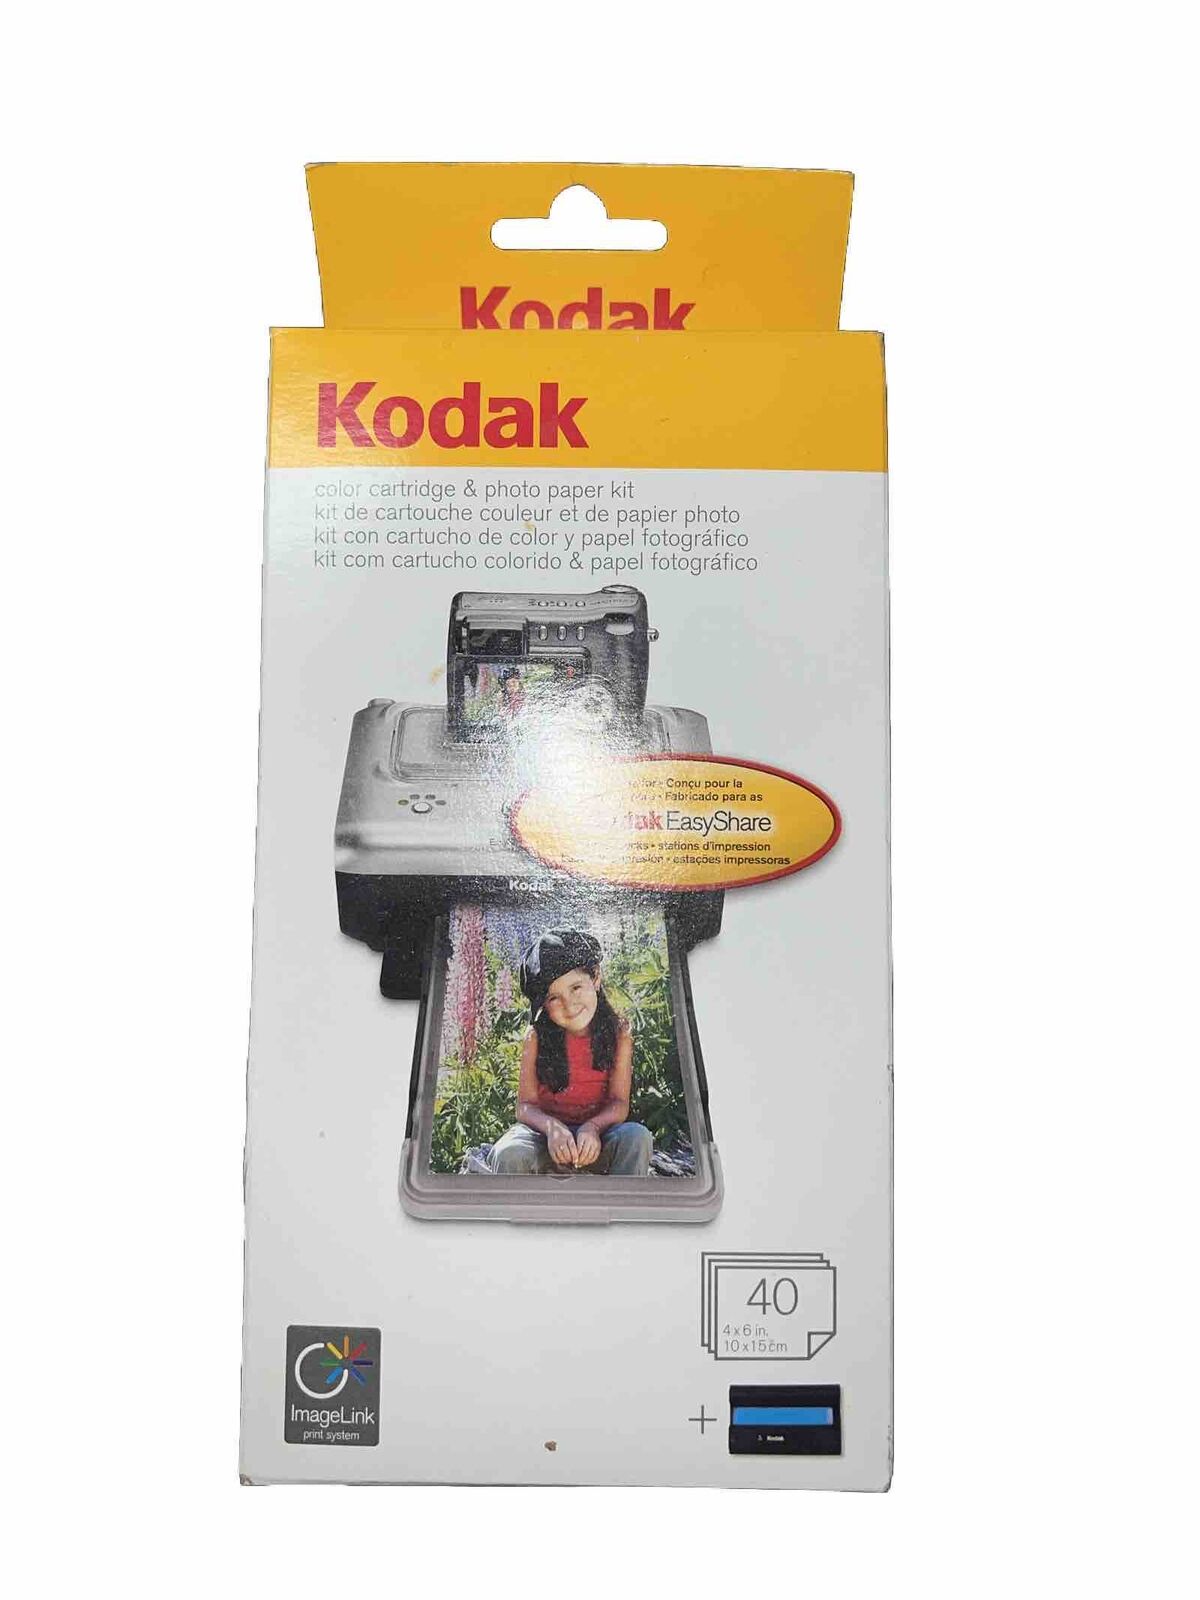 Kodak EasyShare PH-40 Color Cartridges & Photo Paper Kit 4x6 60-count 